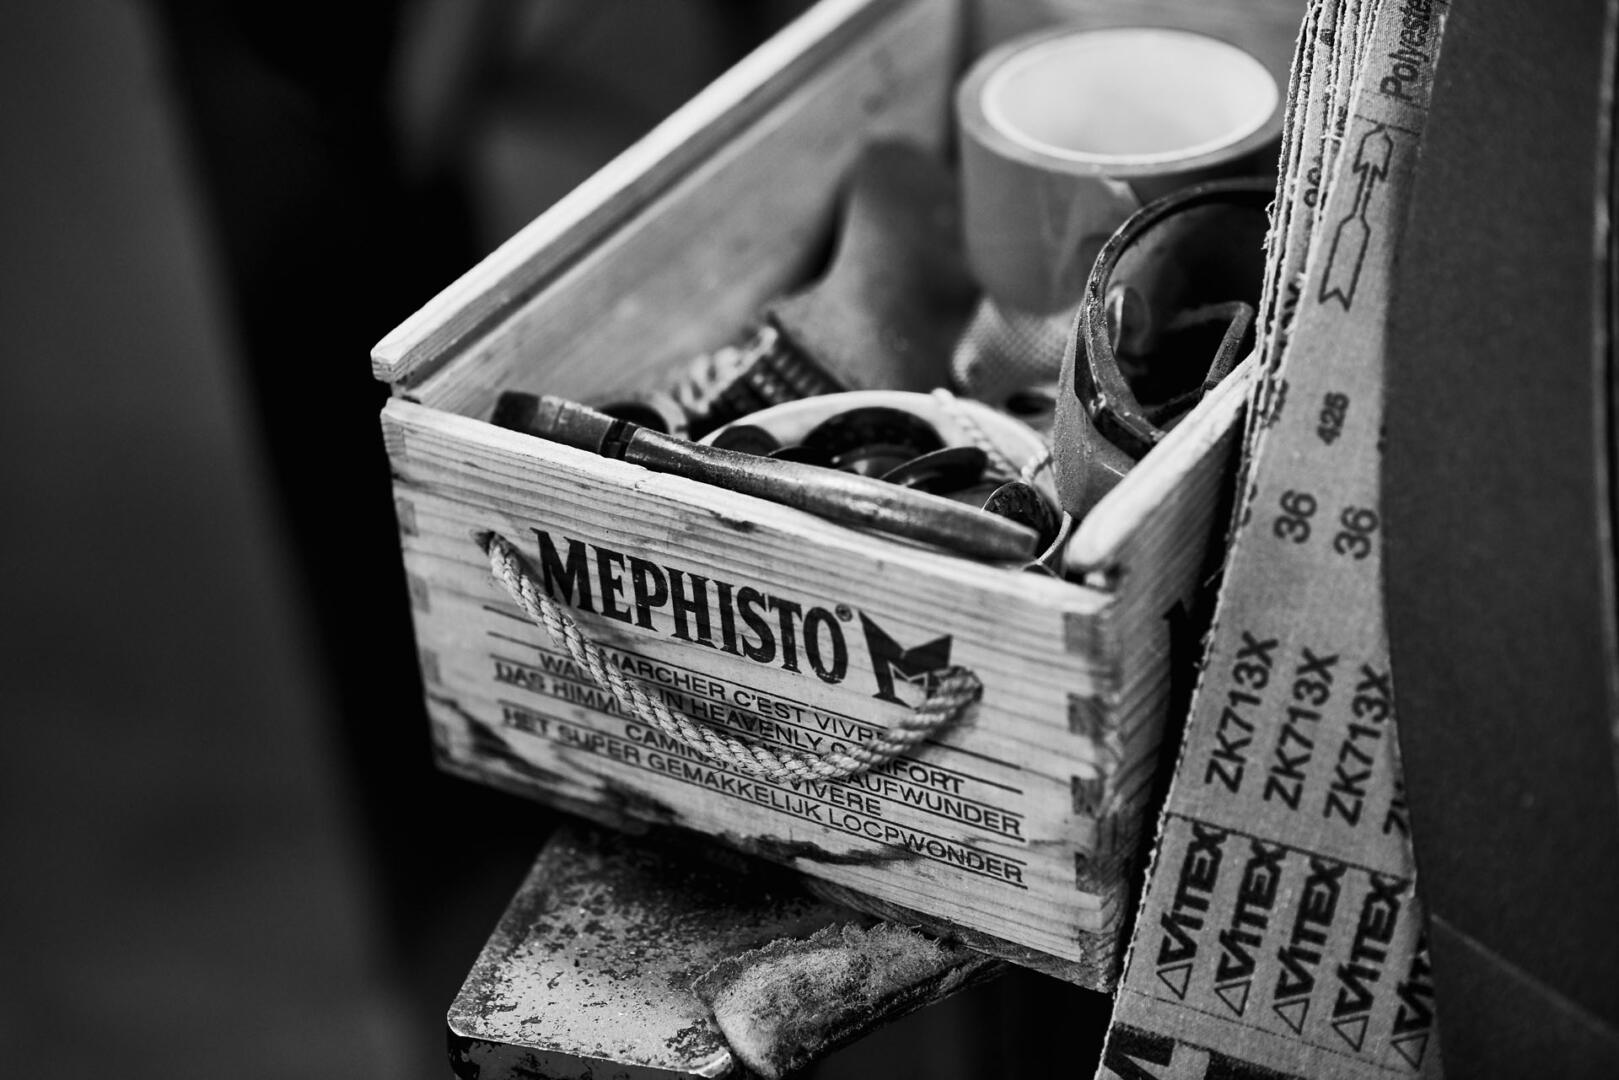 Mephisto Originals 16